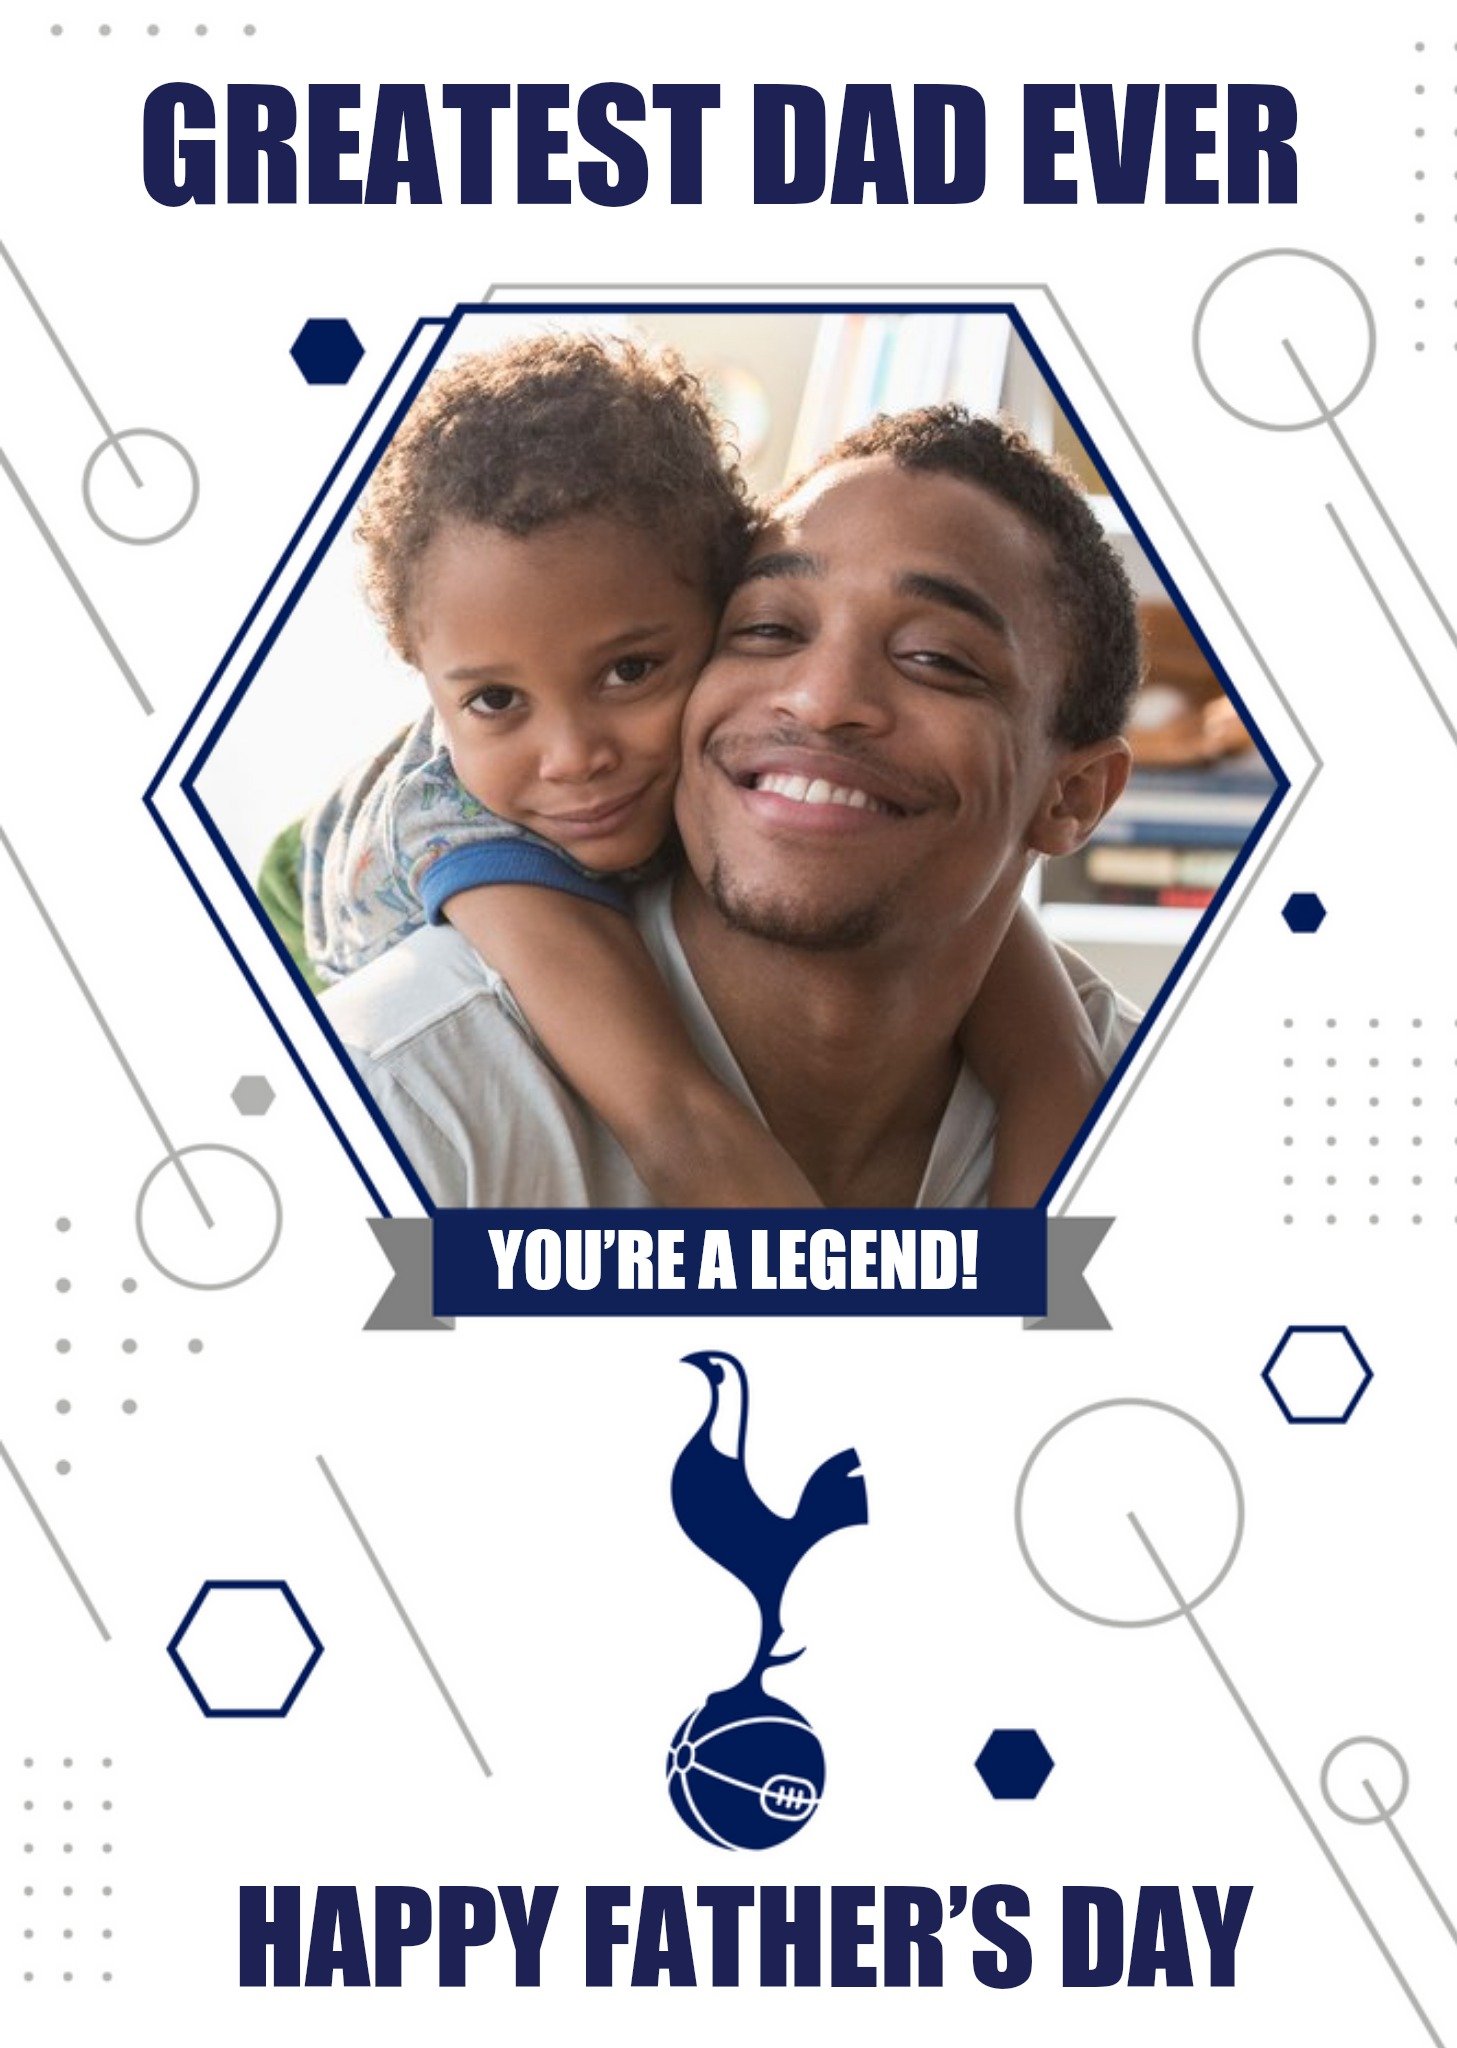 Moonpig Tottenham Hotspur Fc Football Legend Greatest Dad Ever Photo Upload Fathers Day Card Ecard